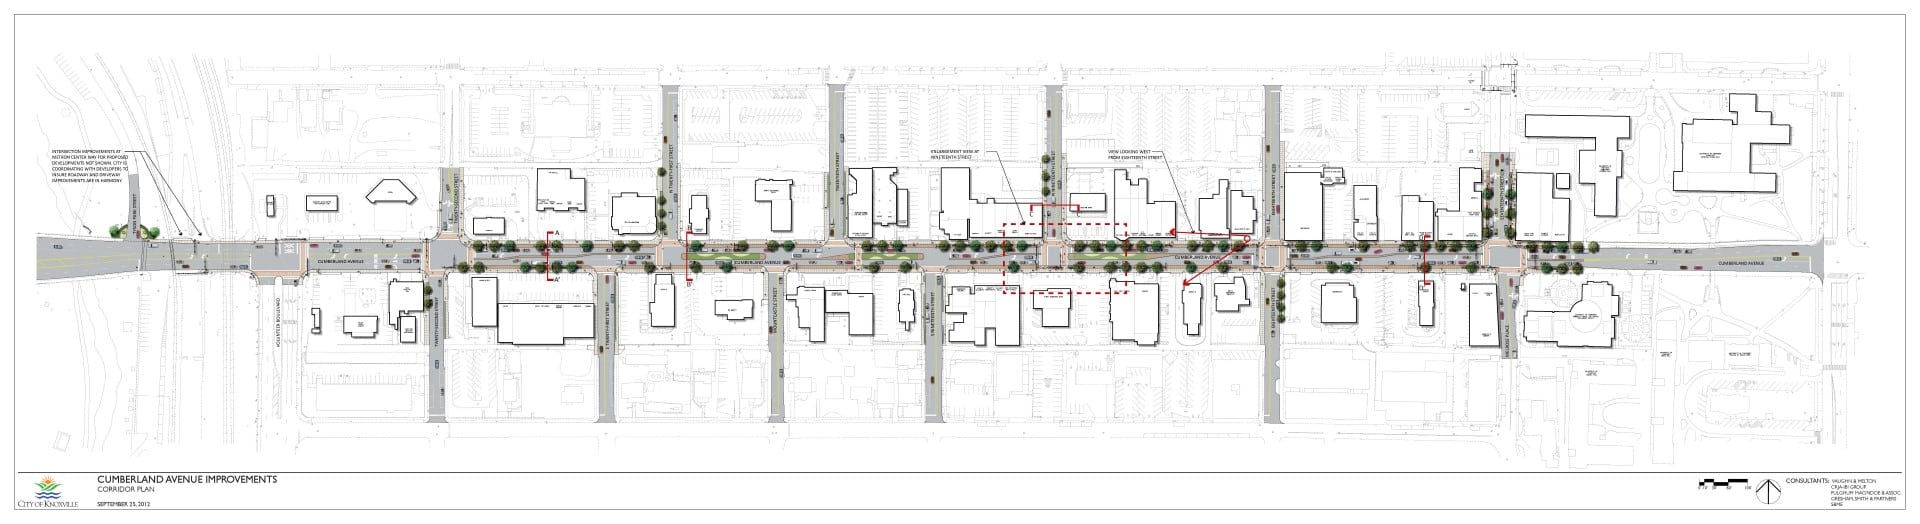 Rendering of the Cumberland Avenue Corridor Plan